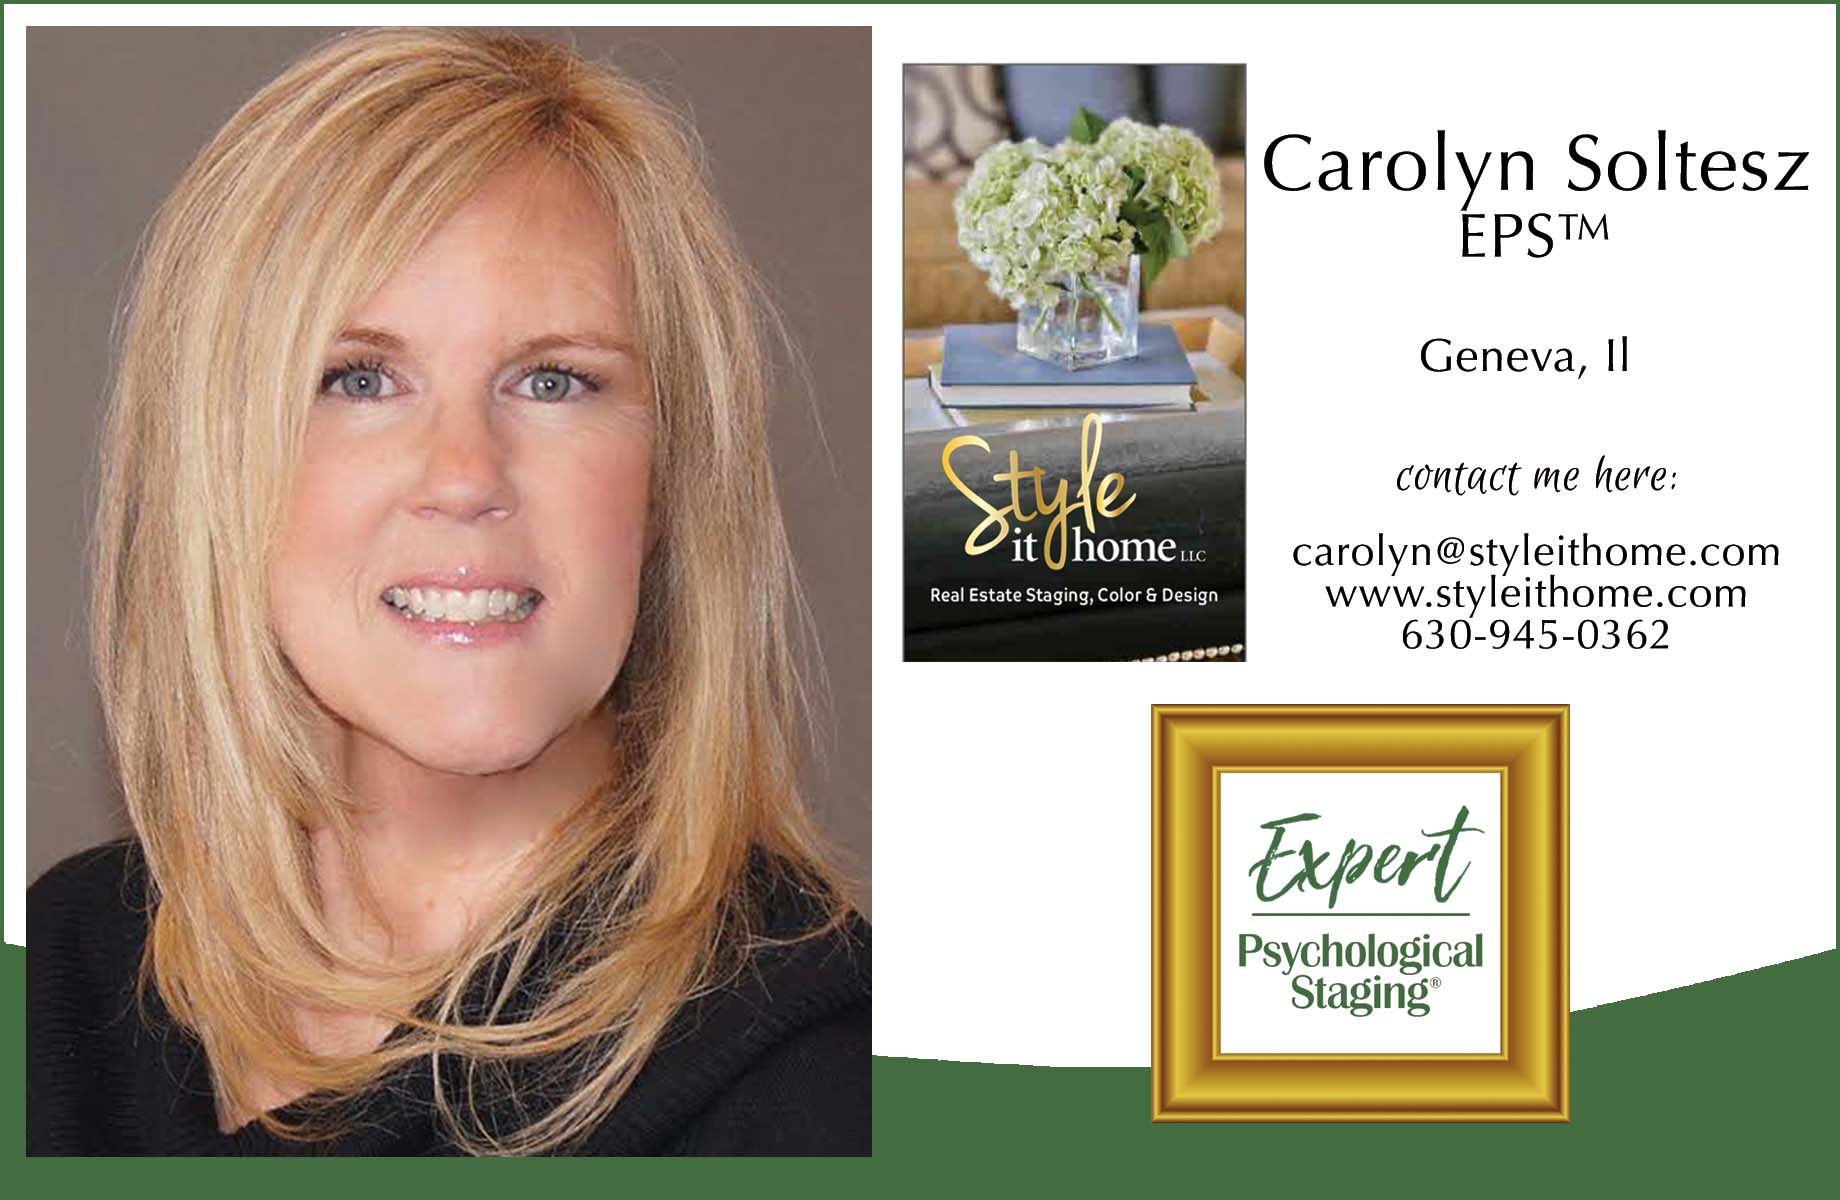 Carolyn Soltesz Expert Psychological Staging Geneva IL